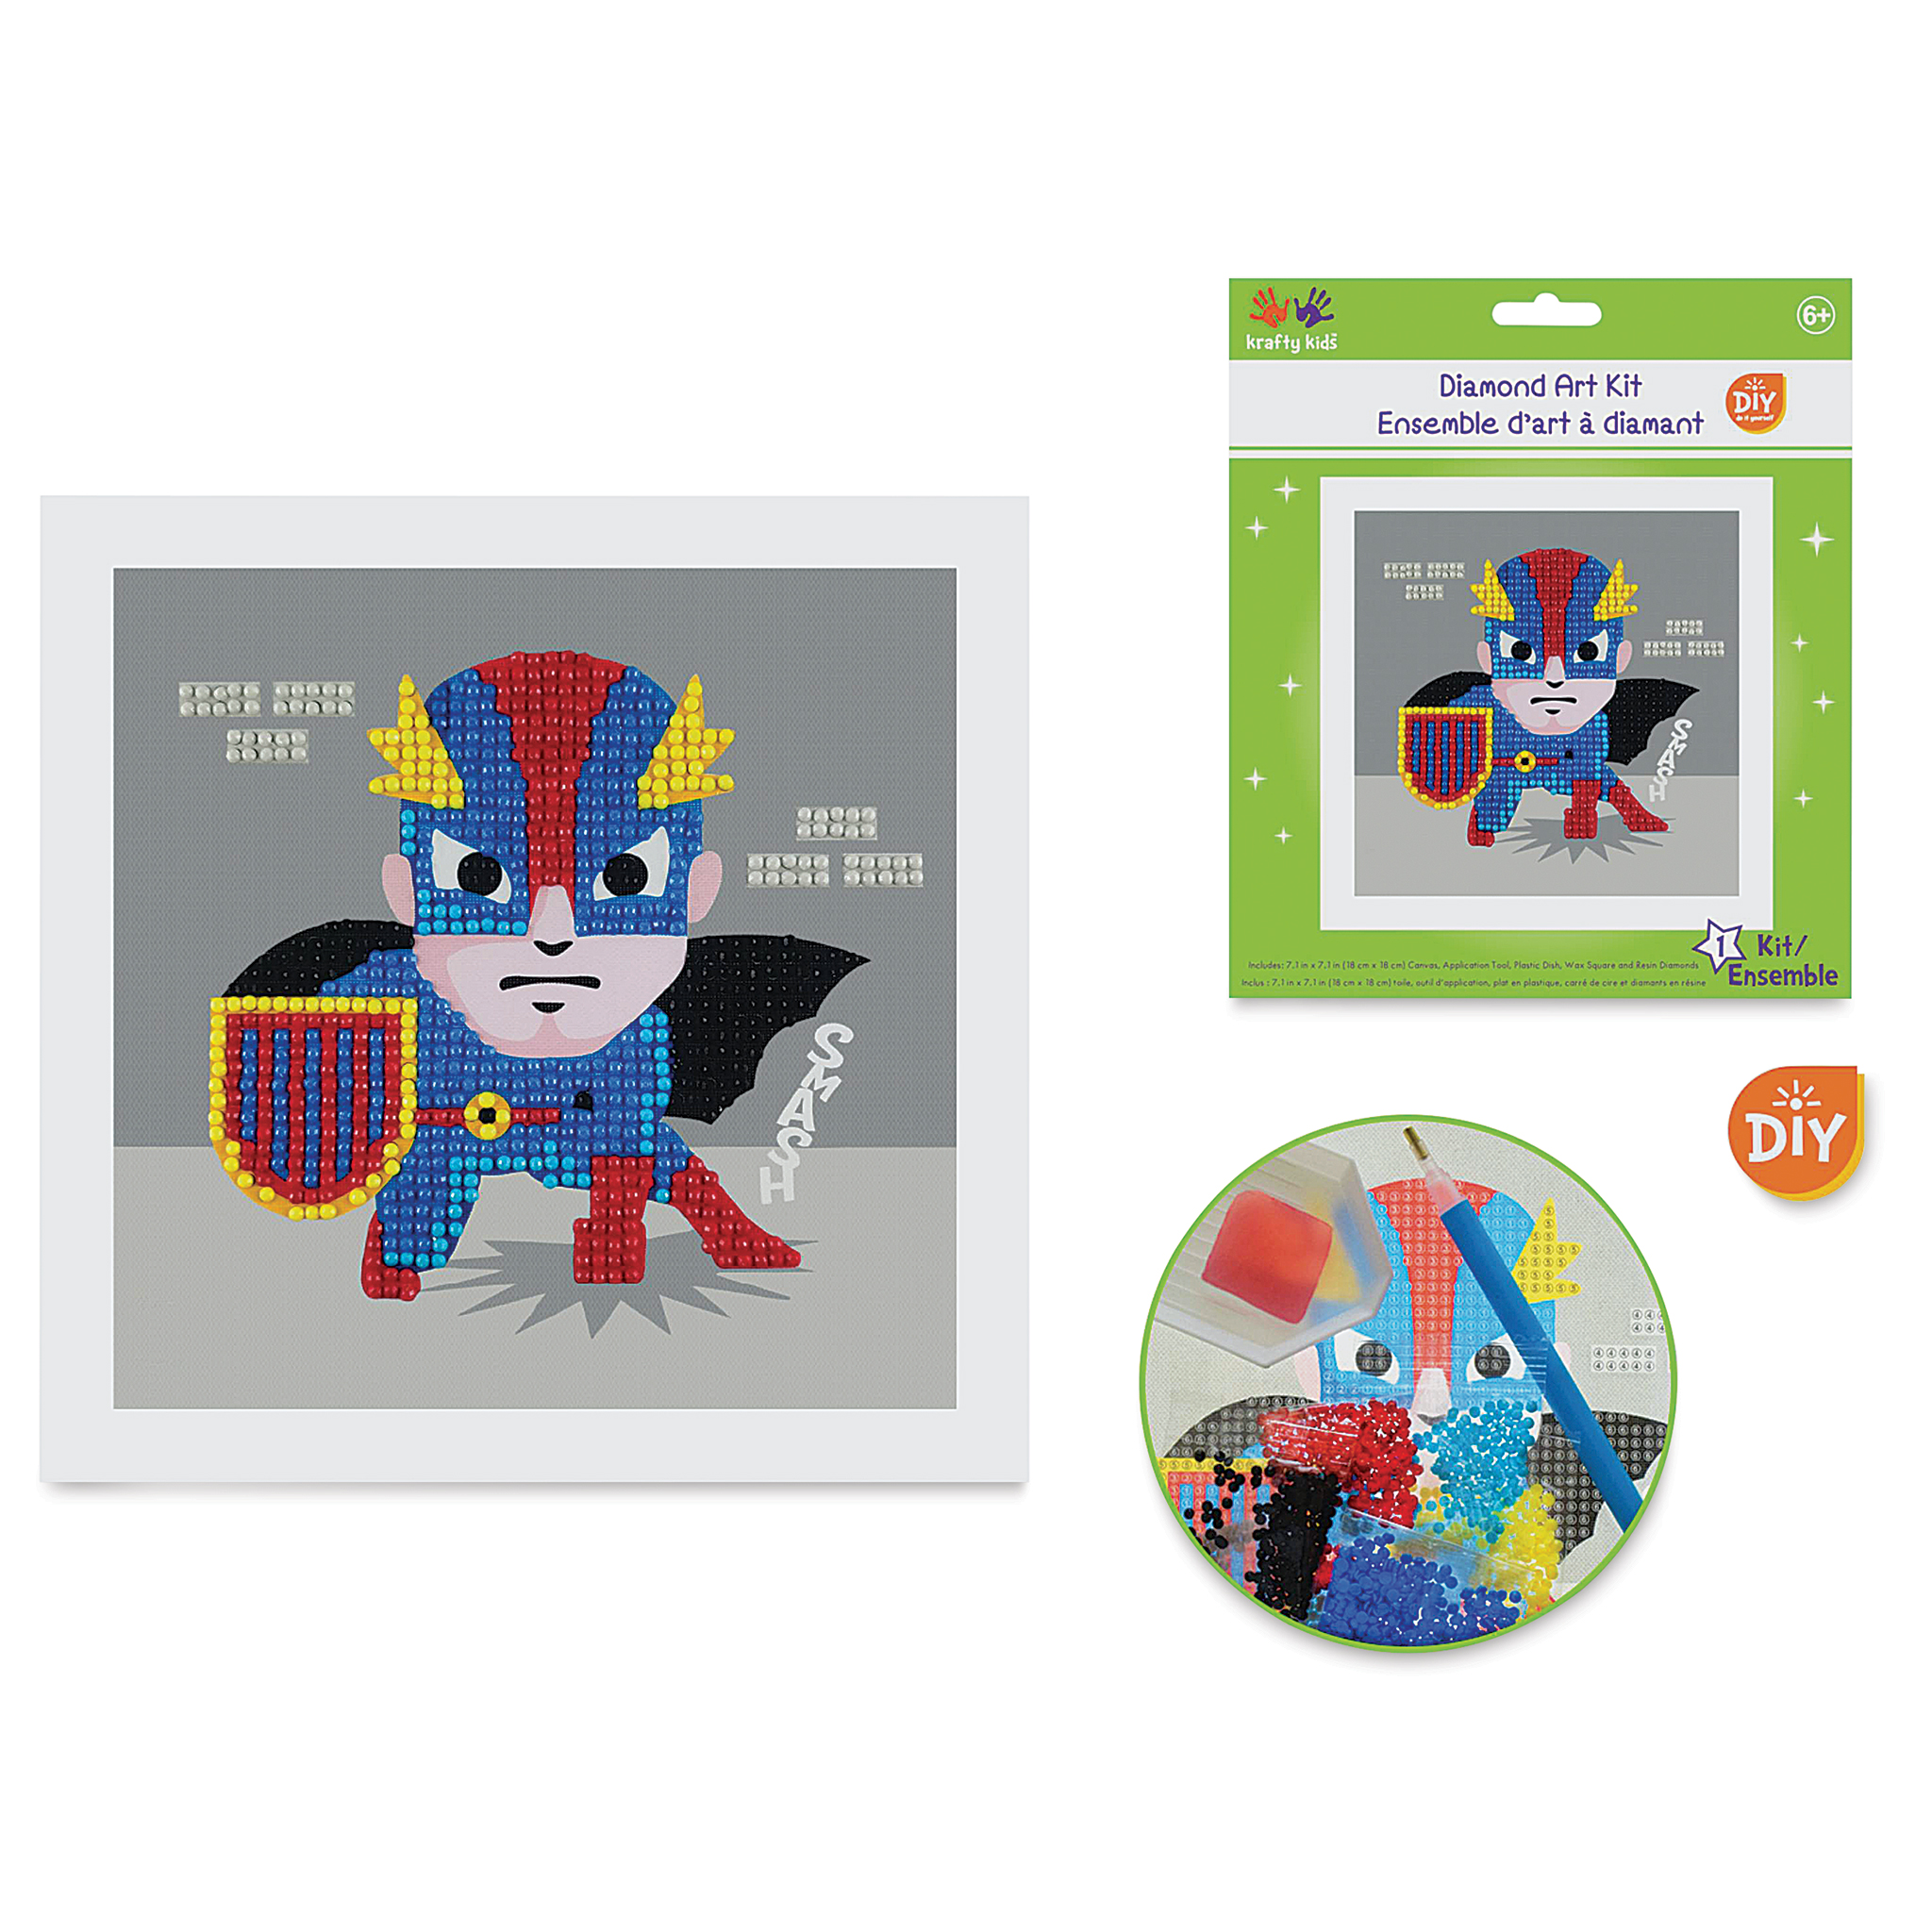 Our MultiCraft Krafty Kids Kit: DIY Diamond Art Kit-Koala MultiCraft is the  newest version